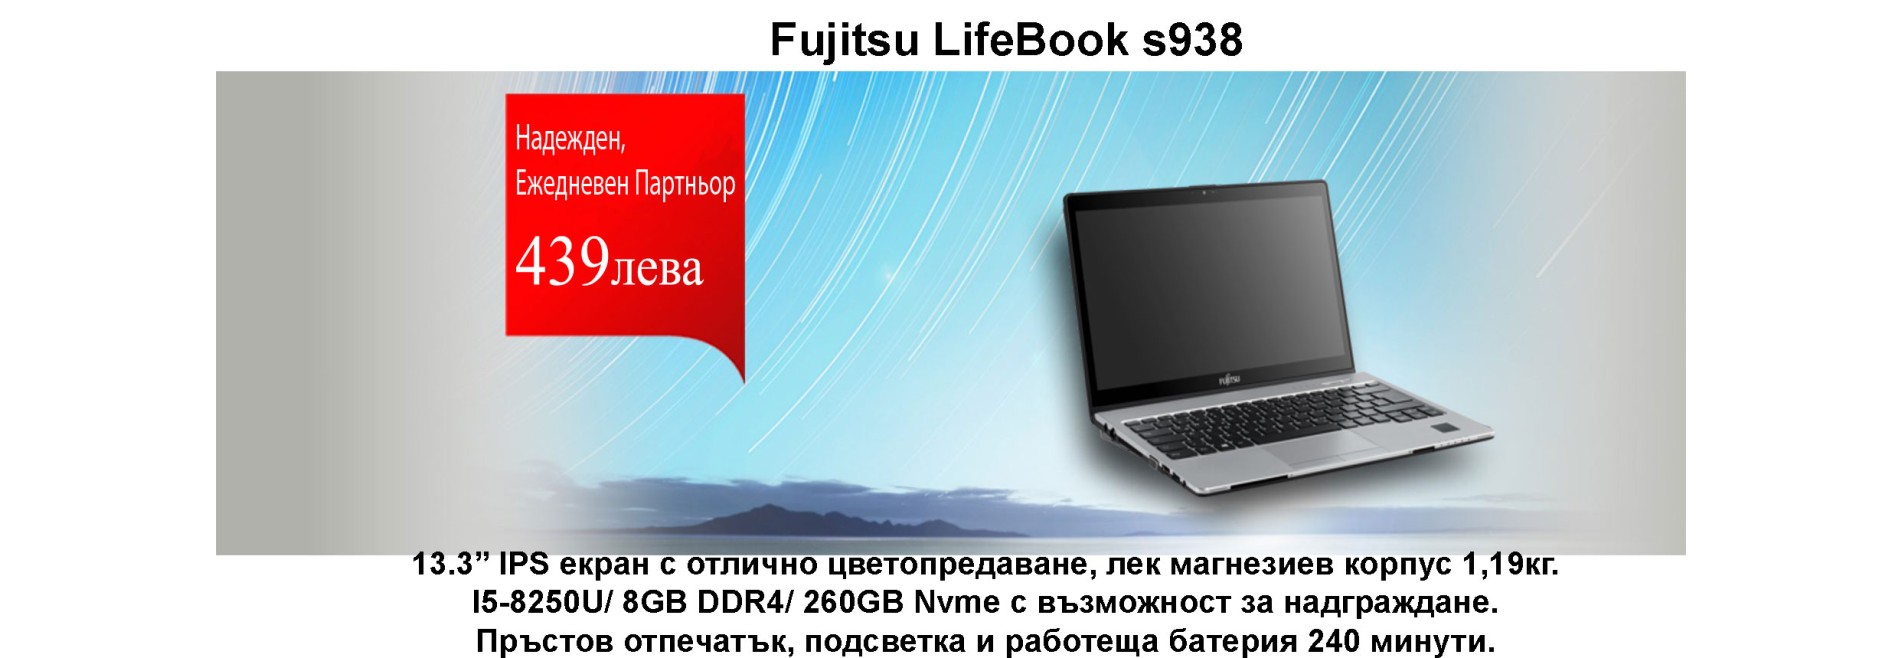 Fujitsu LifeBook s938